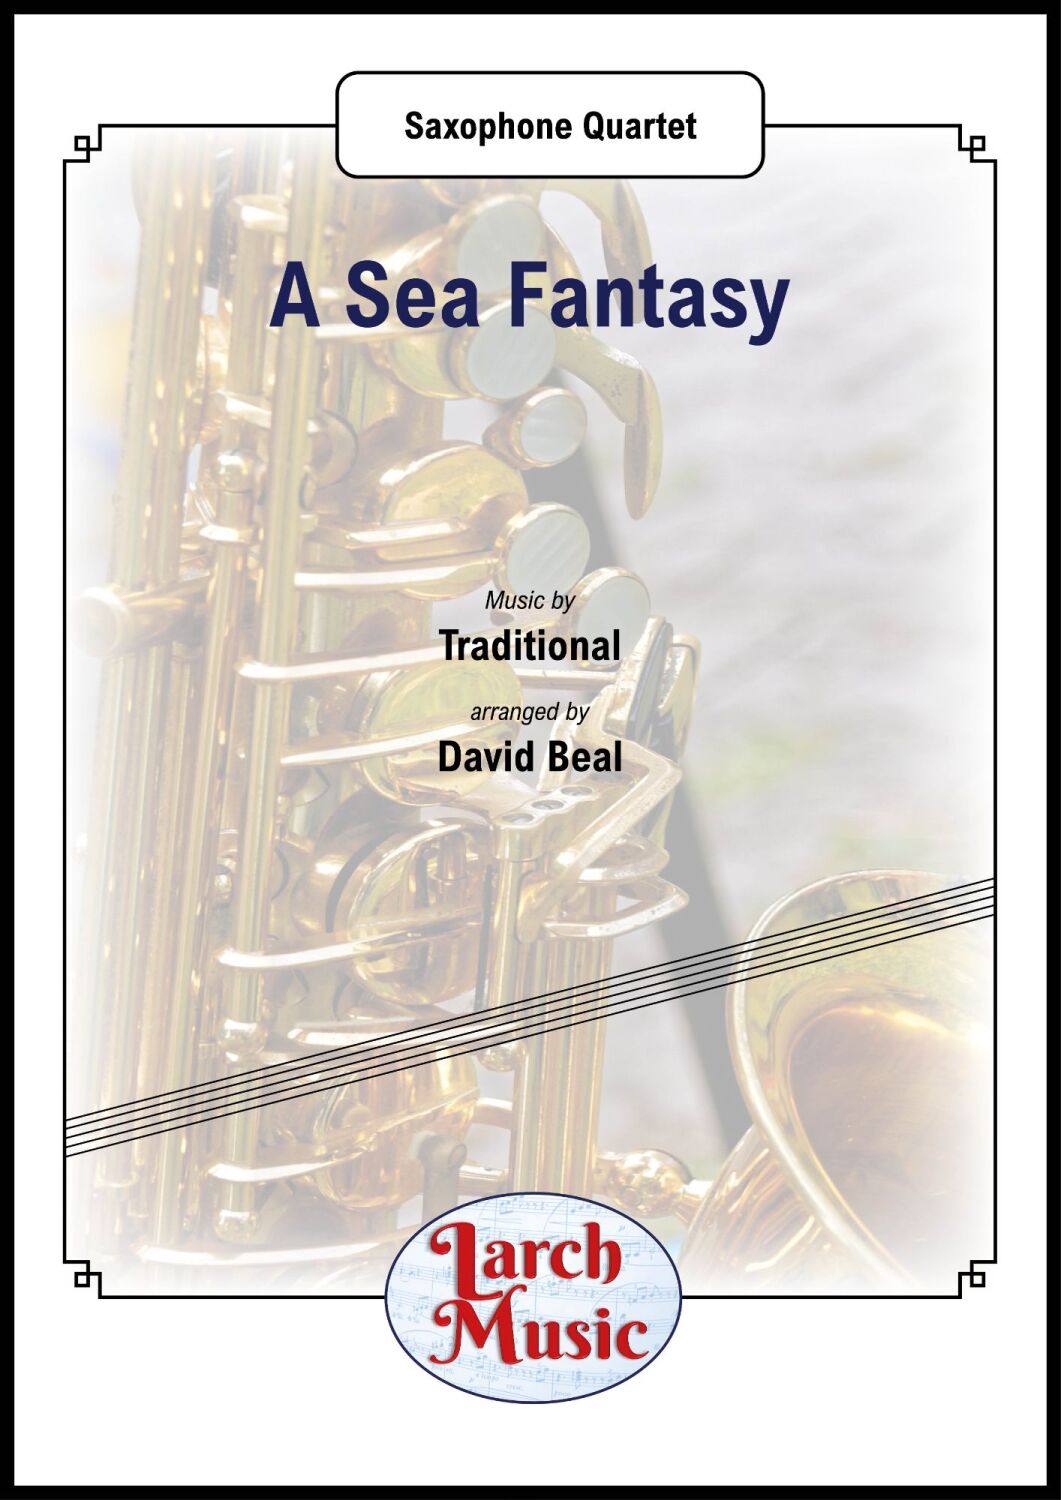 A Sea Fantasy - Saxophone Quartet - LM039